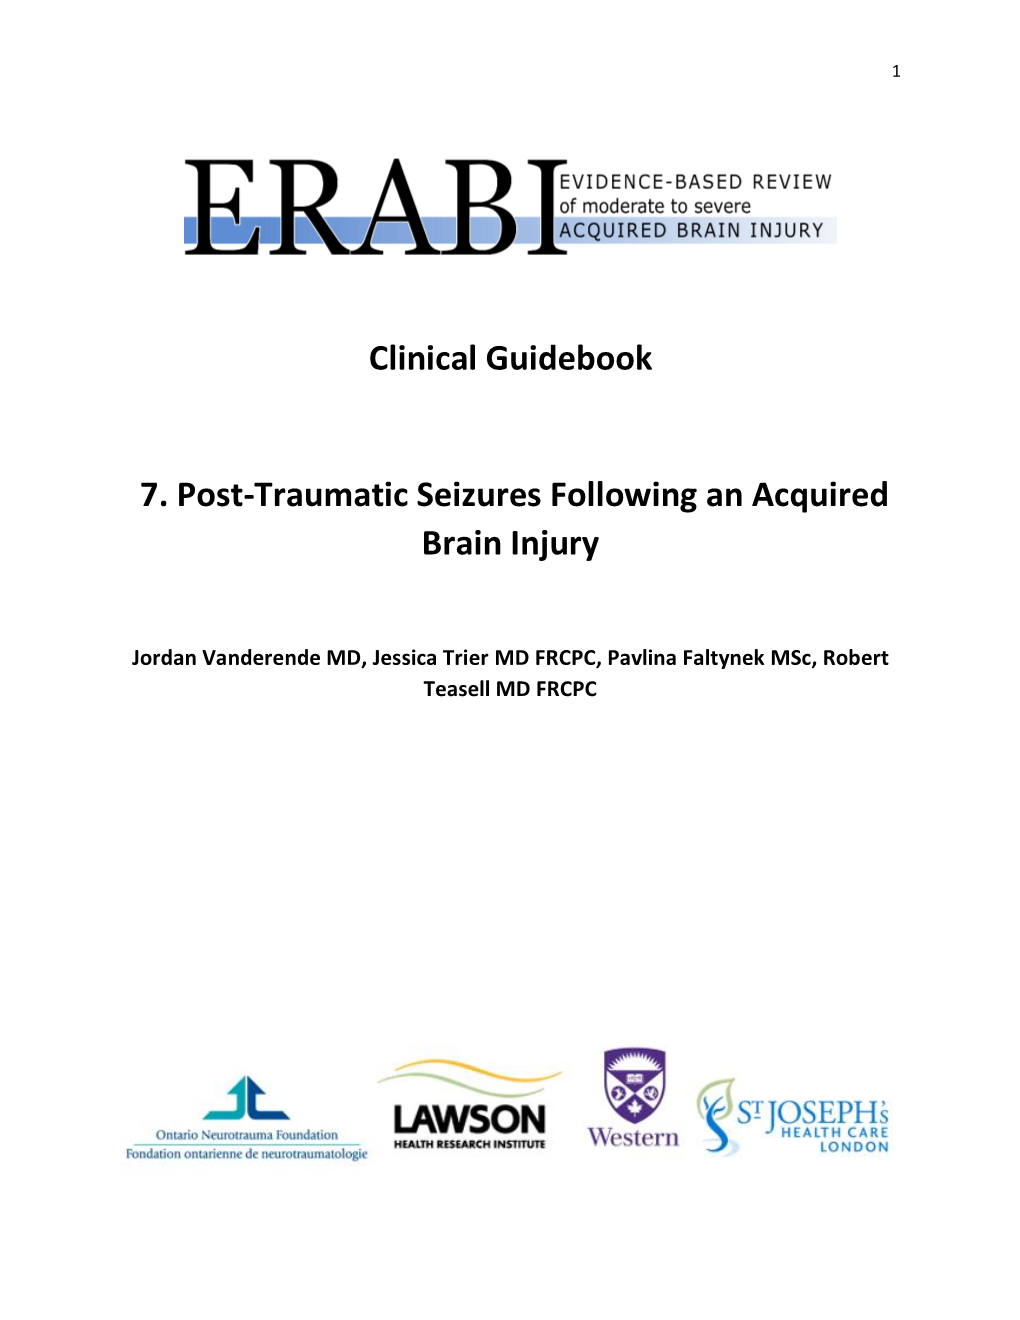 Clinical Guidebook 7. Post-Traumatic Seizures Following an Acquired Brain Injury